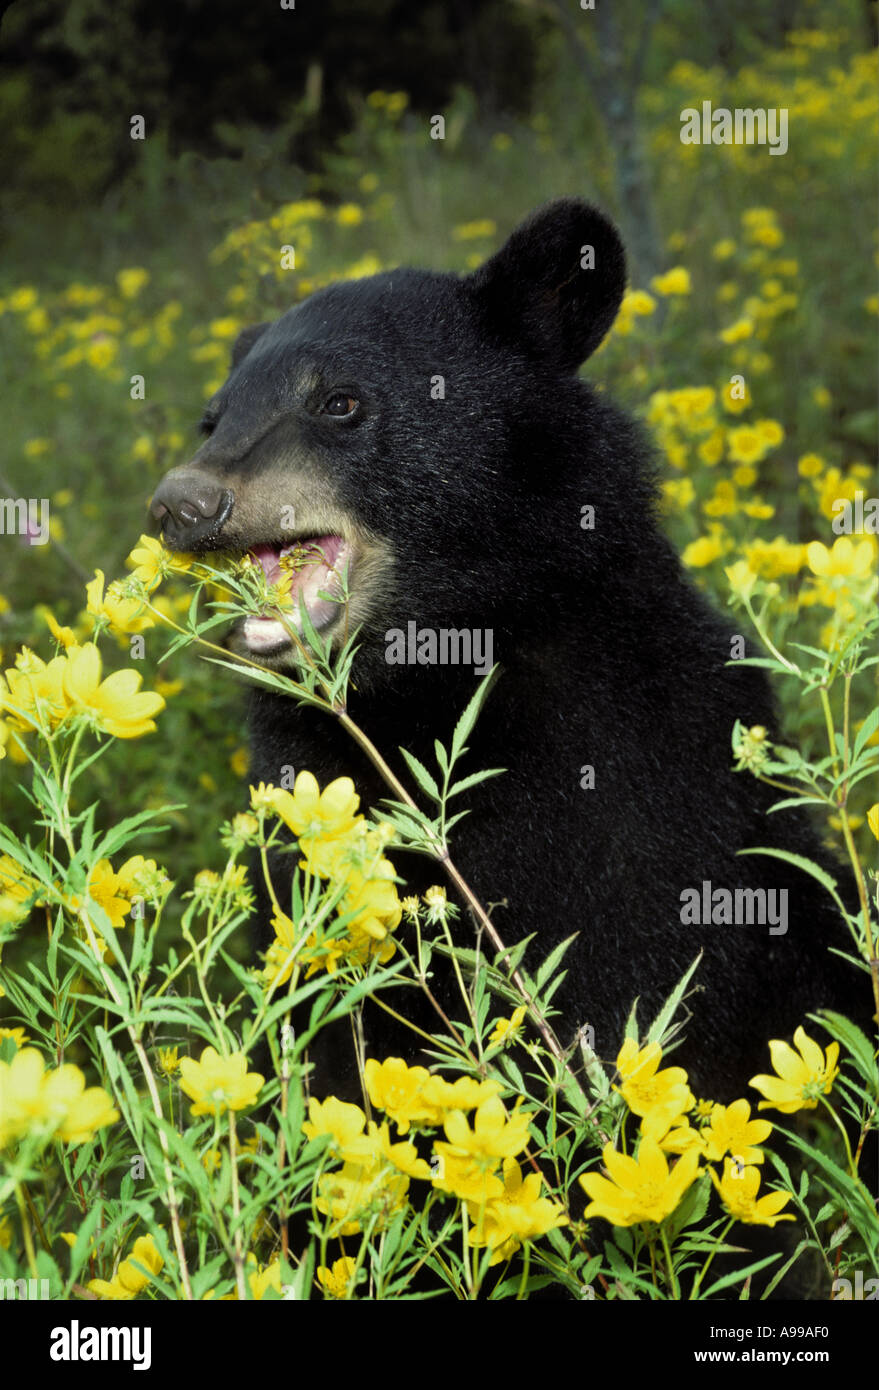 American Black Bear (Ursus americanus) eating flower in field of Bidens found in north Eastern and Western states Stock Photo